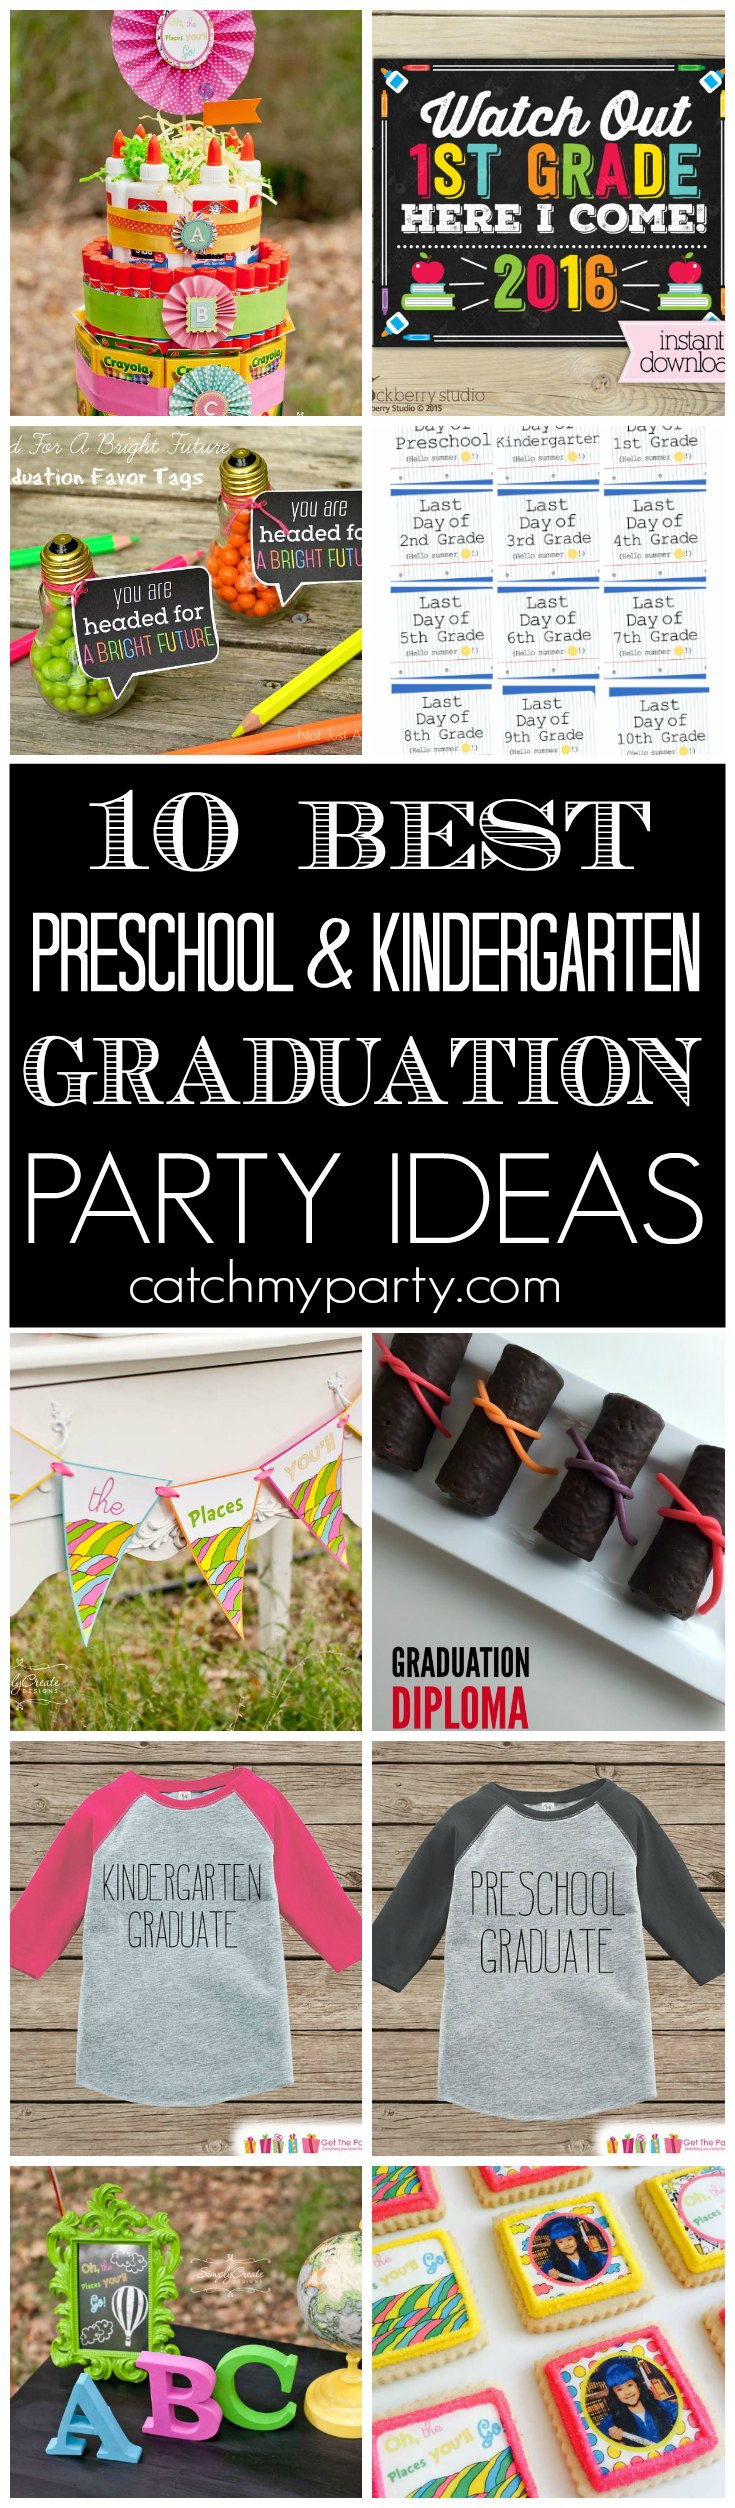 Preschool Graduation Party Ideas
 10 Best Preschool & Kindergarten Graduation Party Ideas